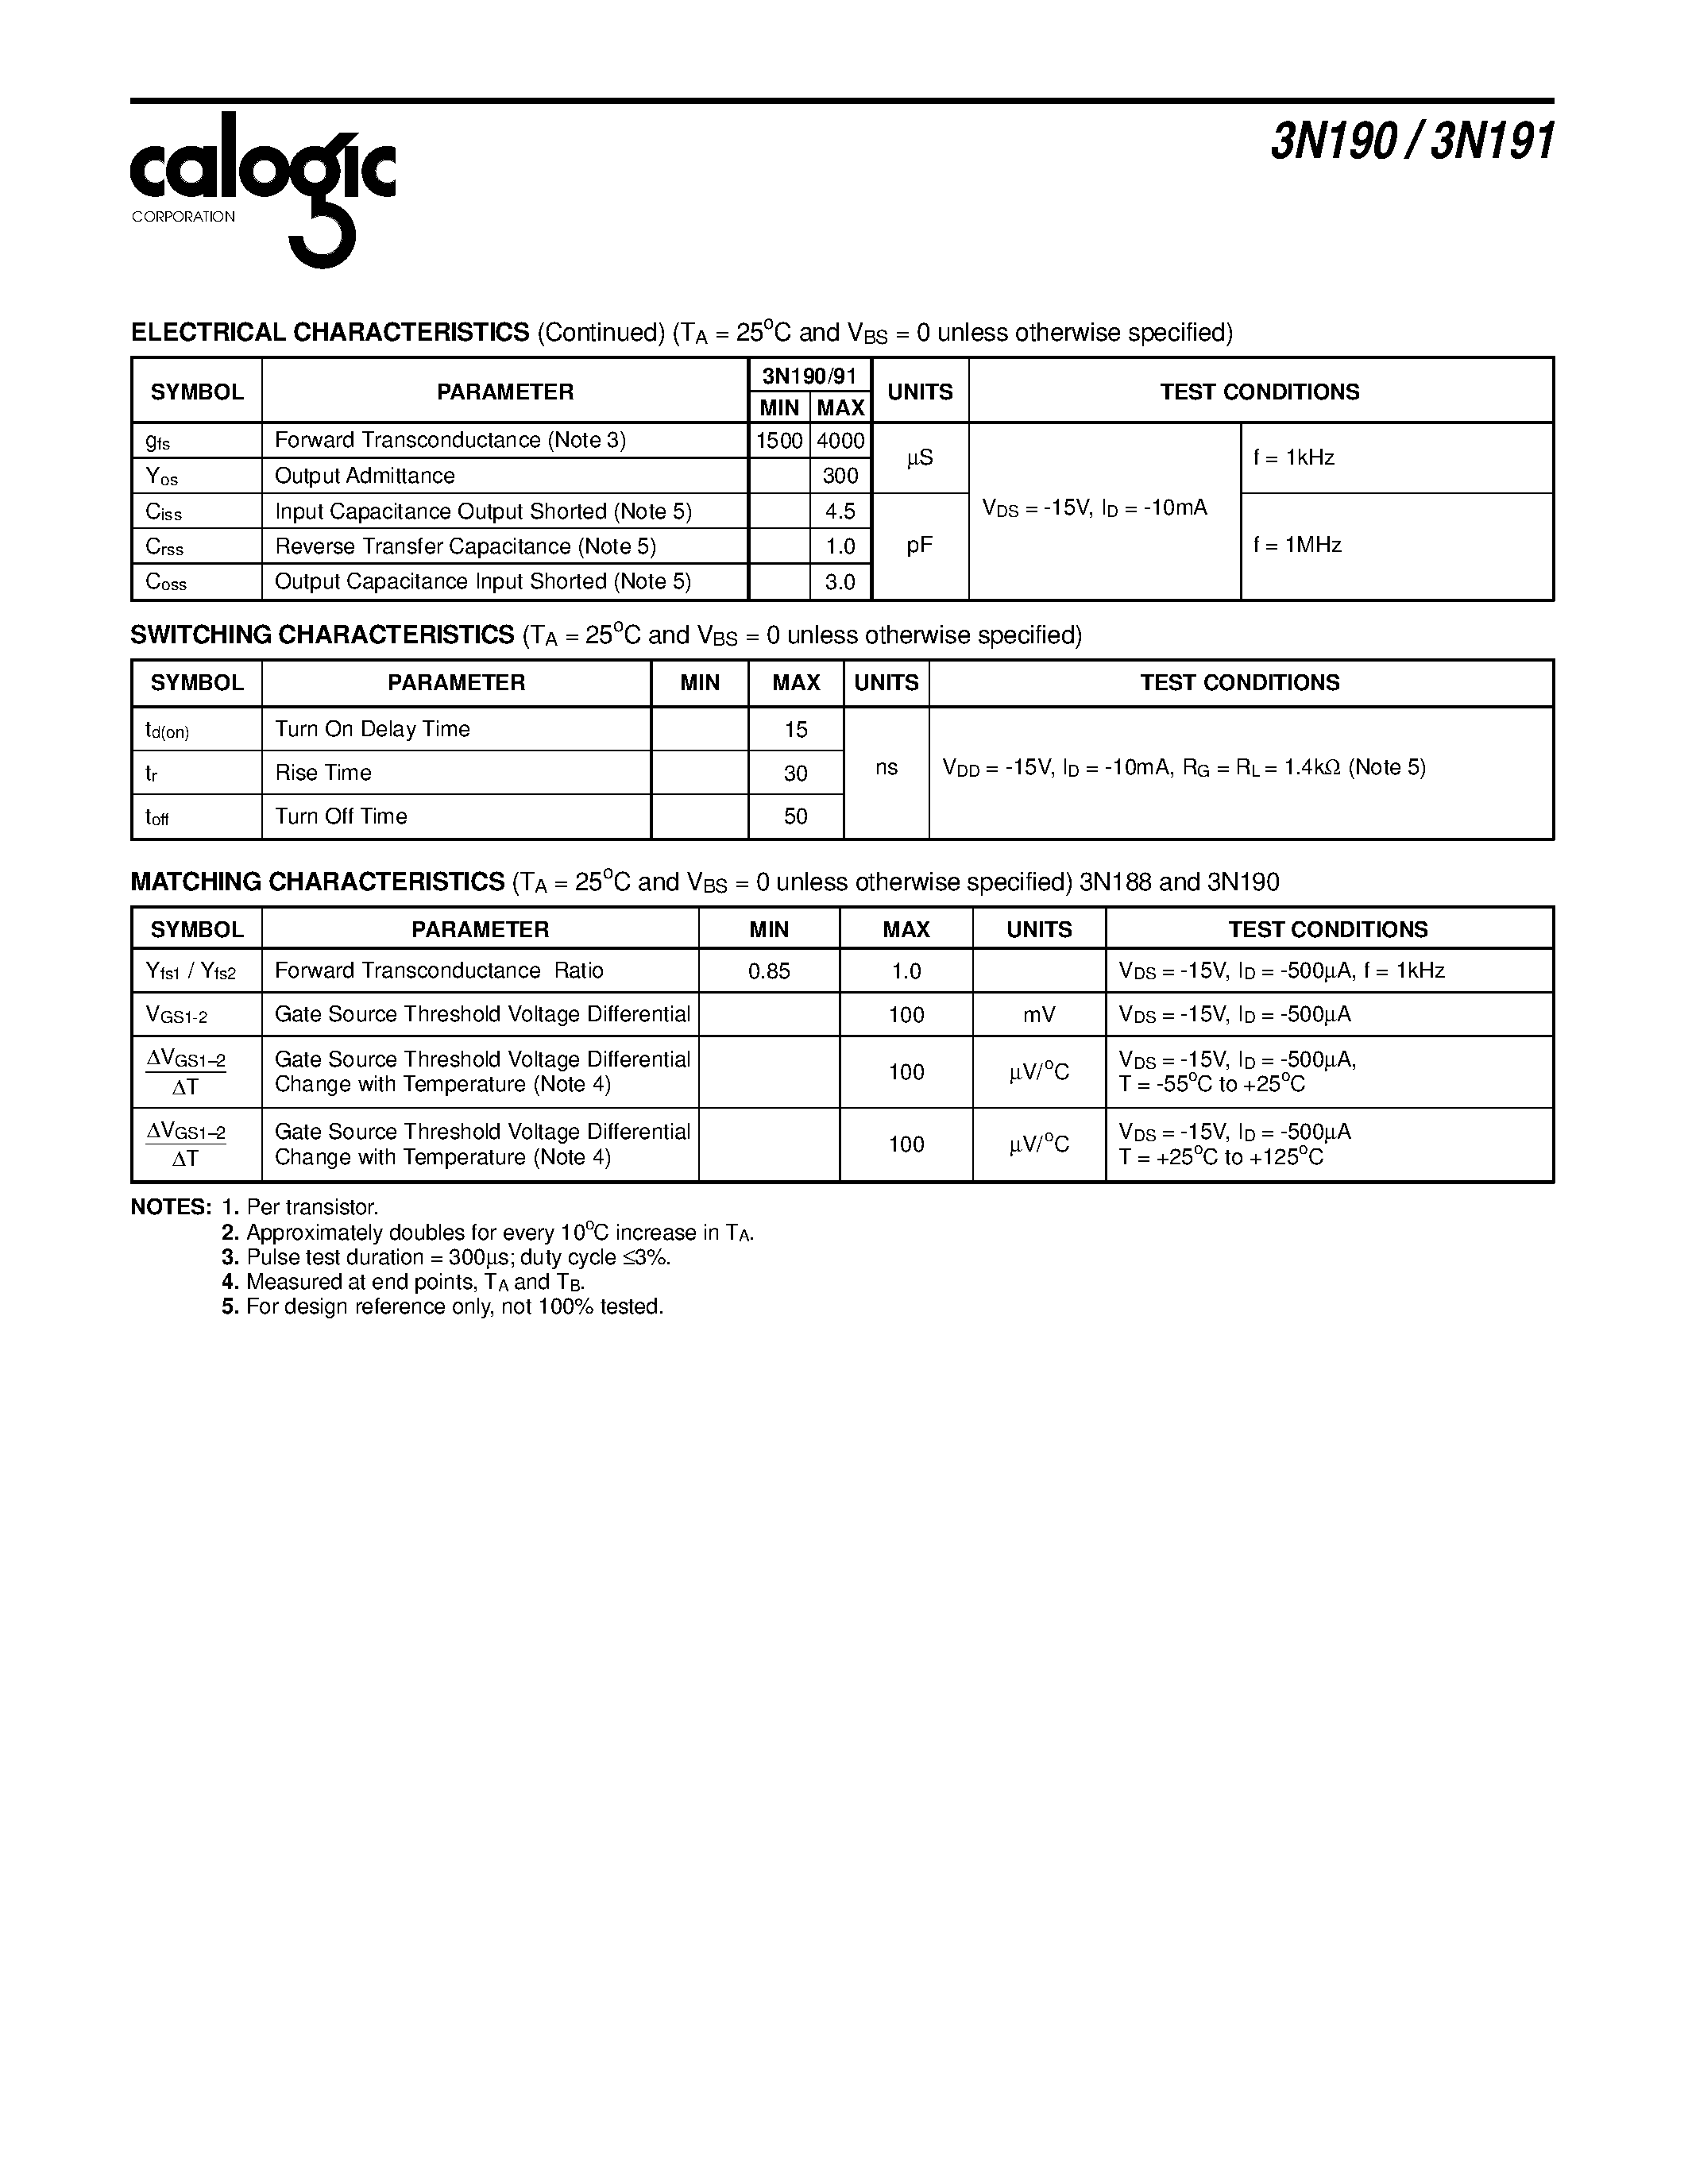 Datasheet X3N190-91 - Dual P-Channel Enhancement Mode MOSFET General Purpose Amplifier page 2